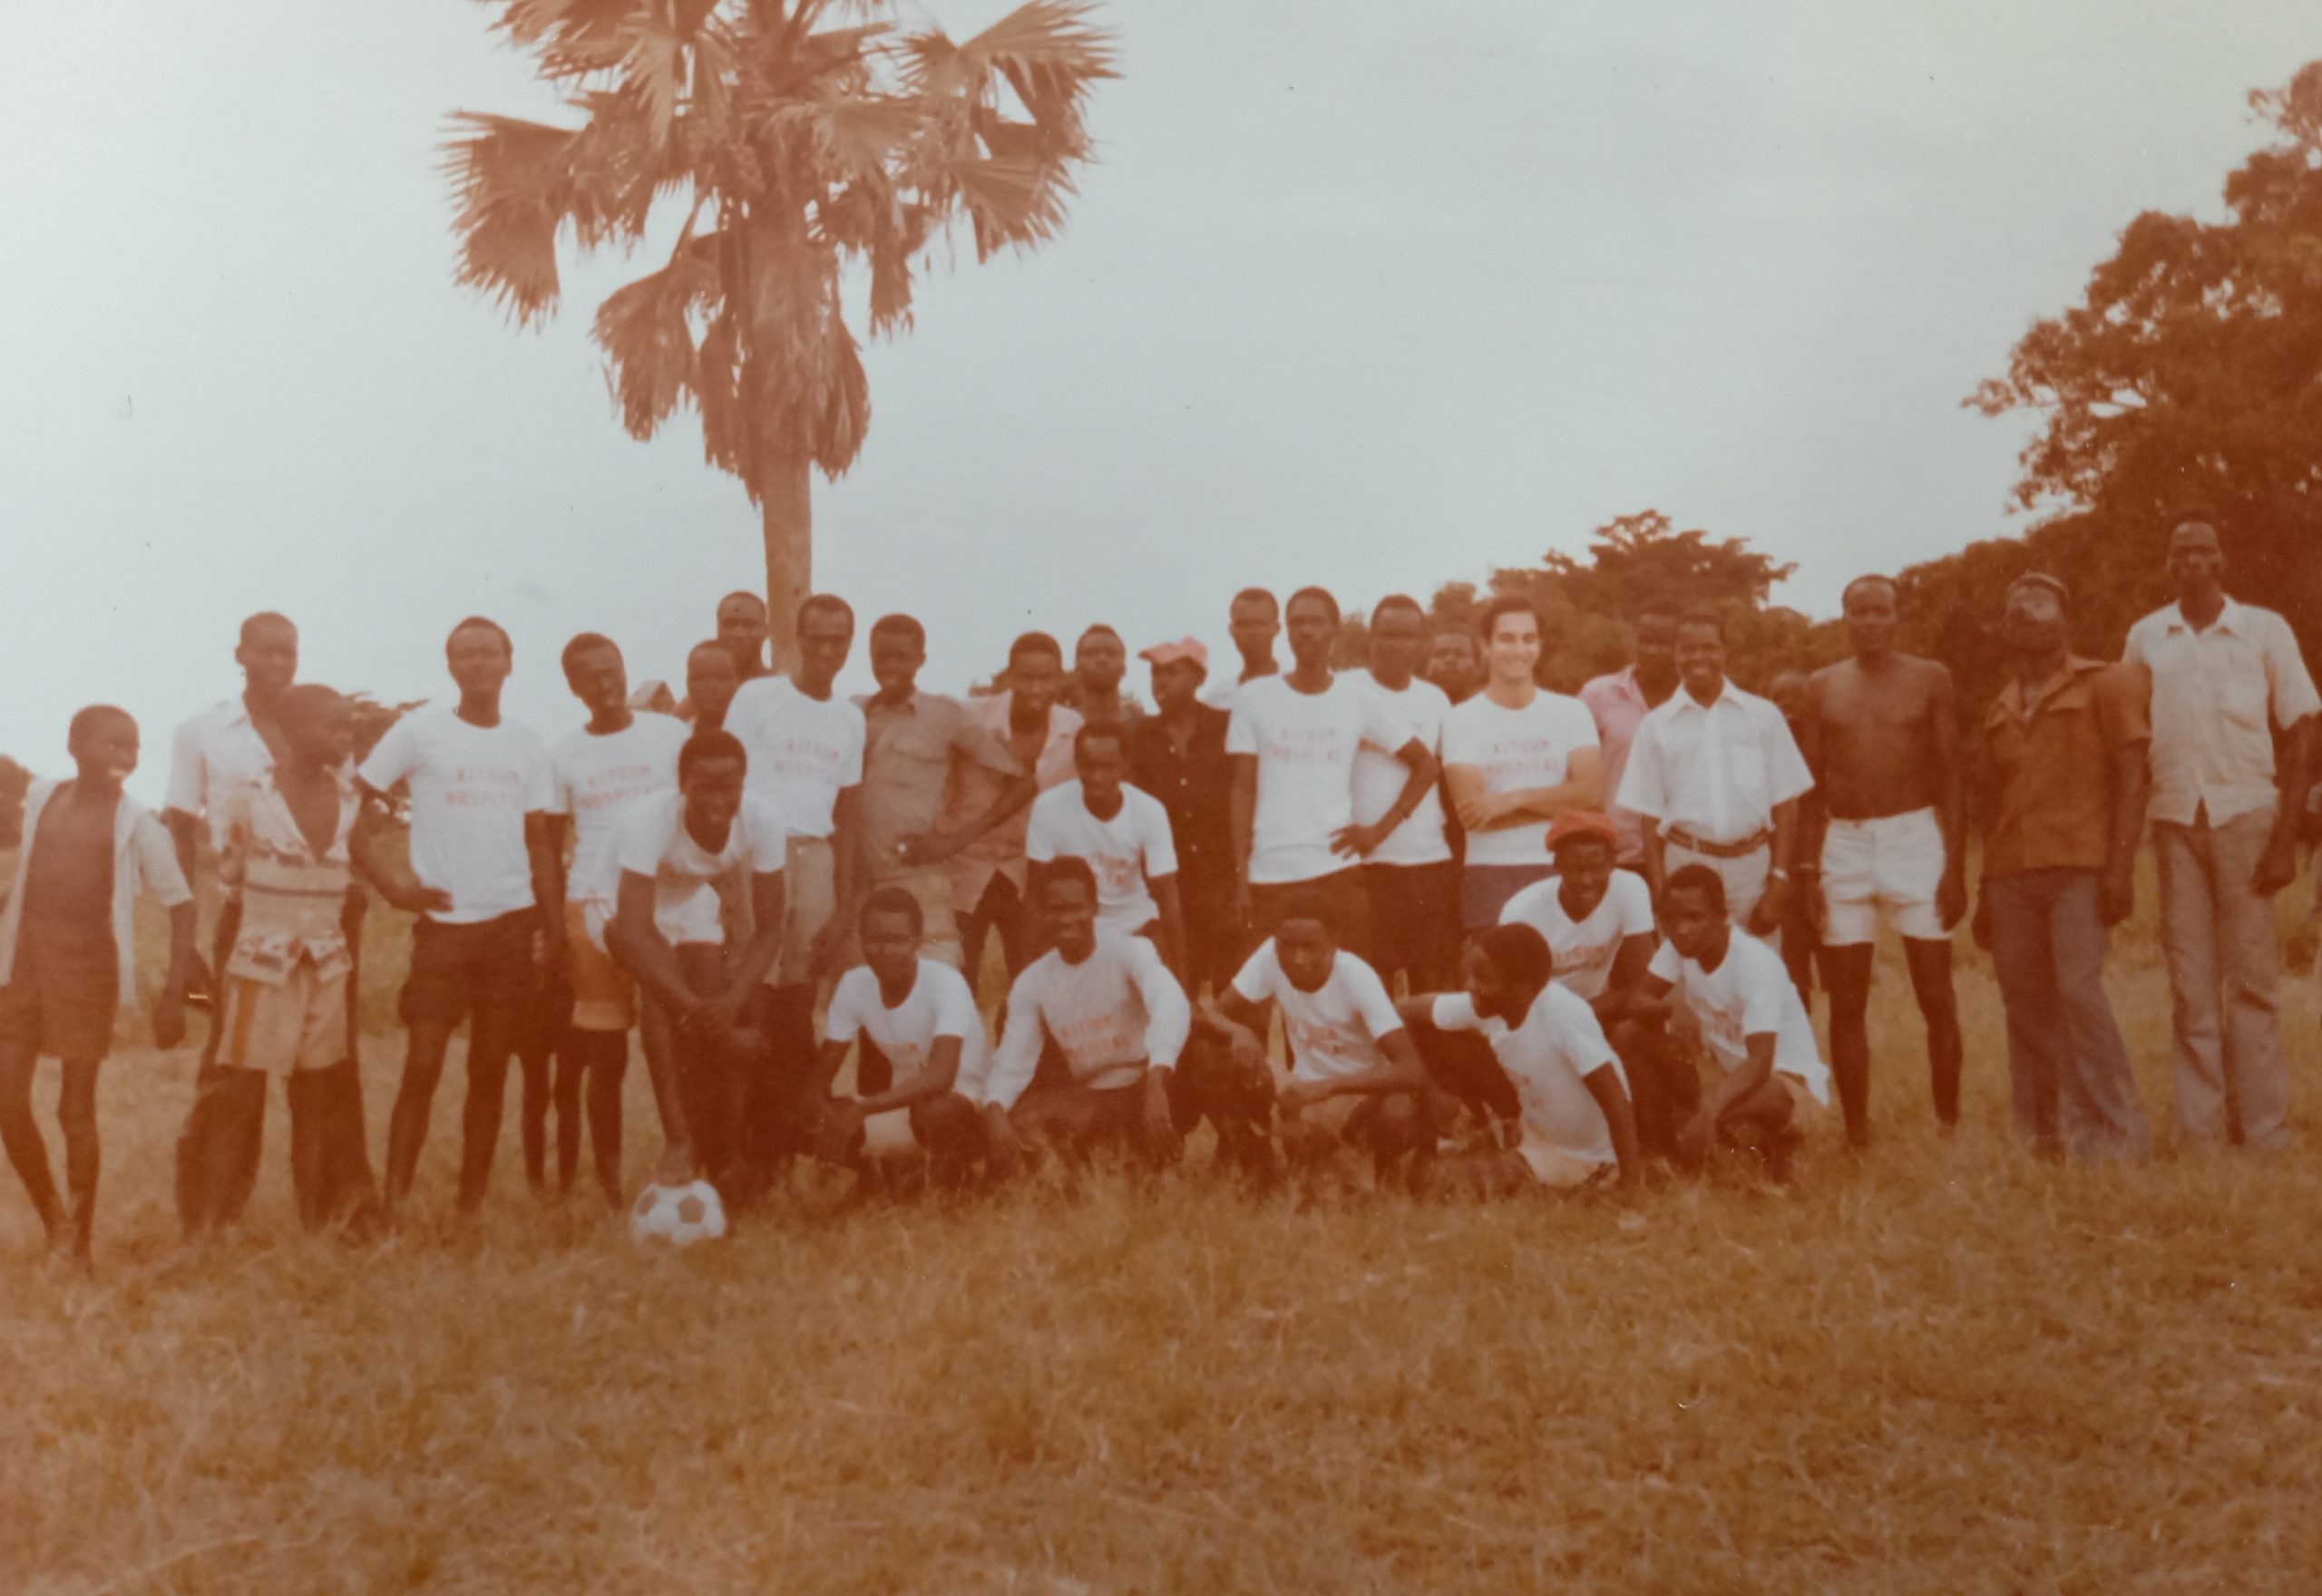 Filippo Ciantia - Kitgum Hospital (1980) The Hospital football team